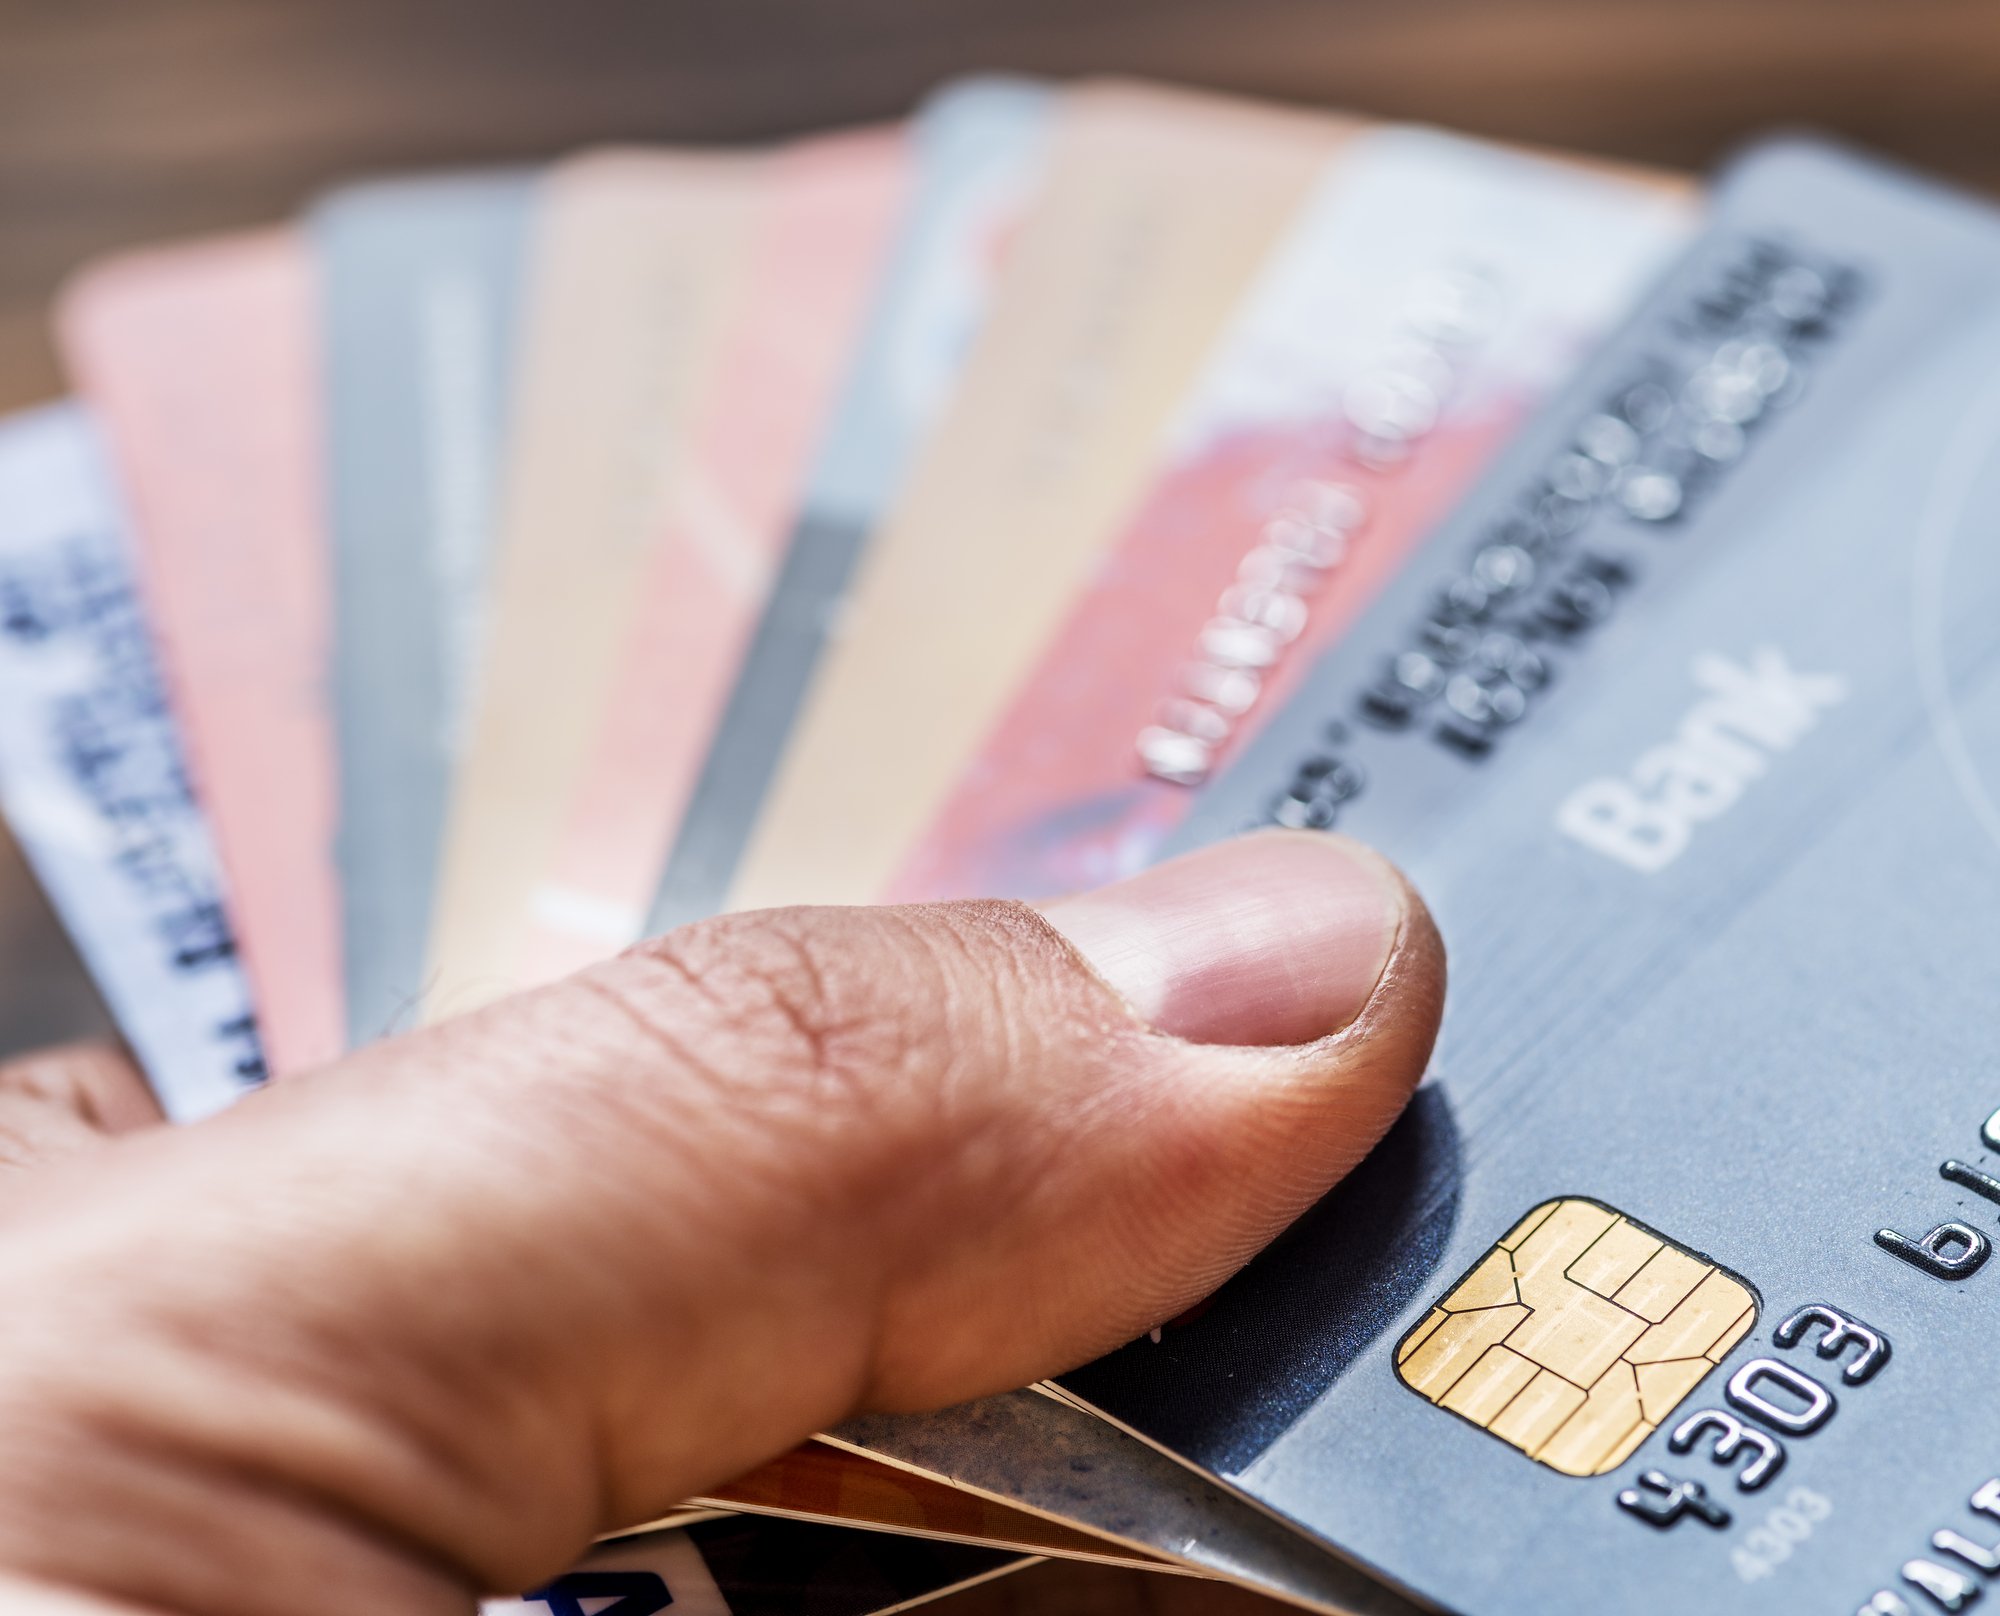 CBN $20 limit on debit cards 